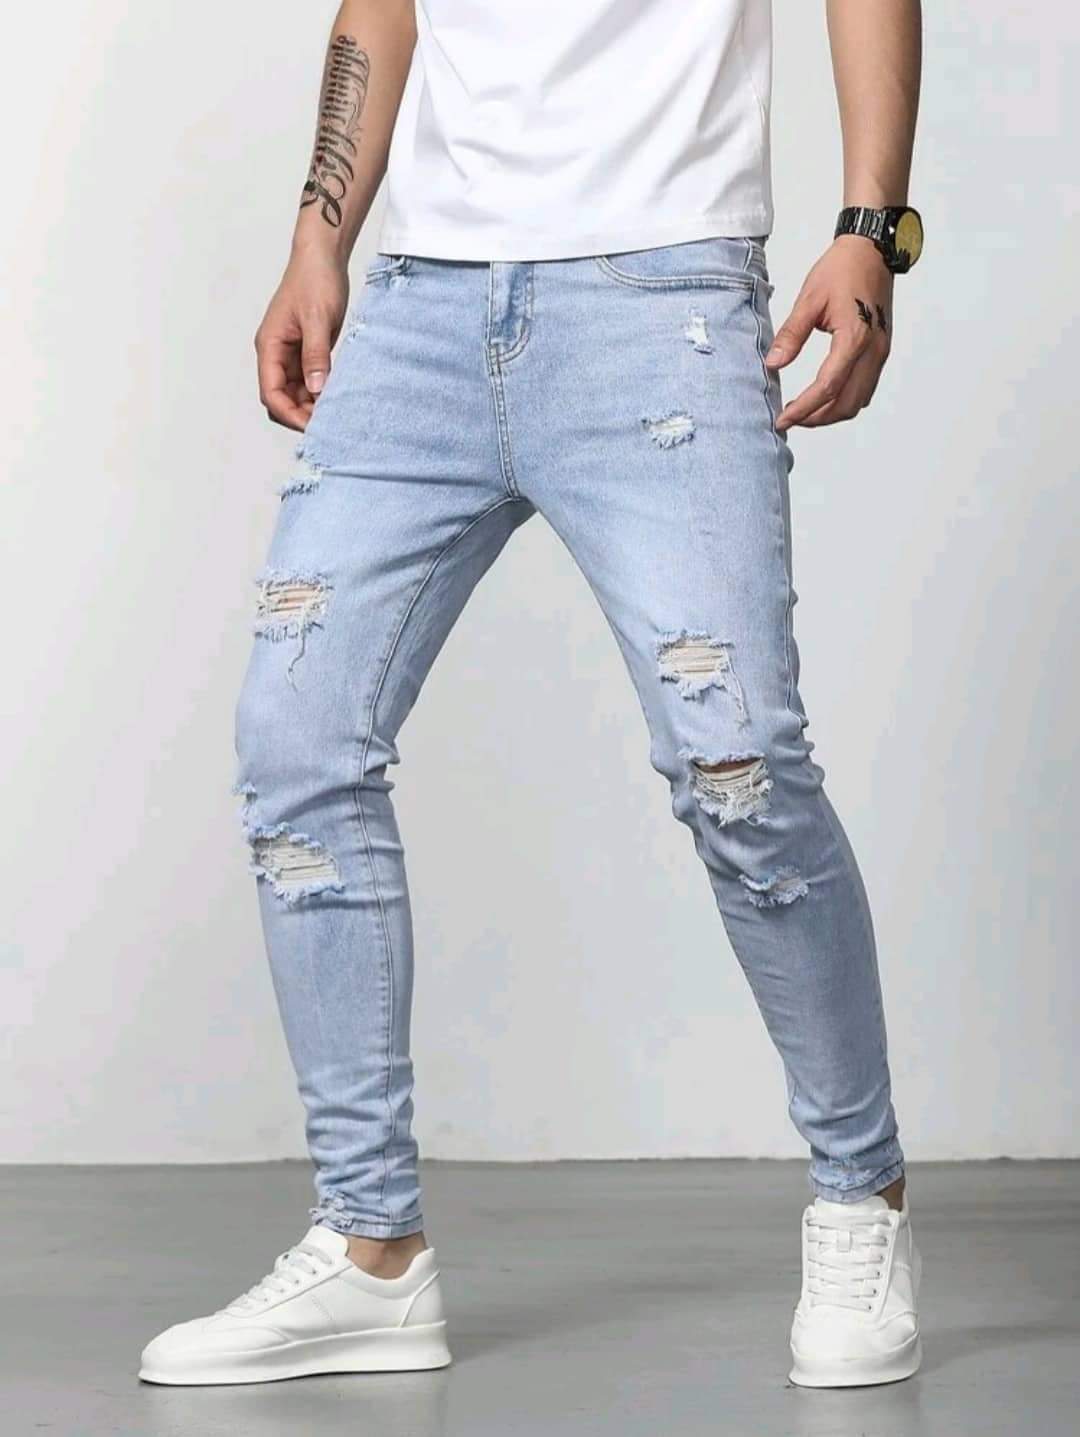  PRISIA Jeans for Men Men's Jeans Men Ripped Frayed Cut